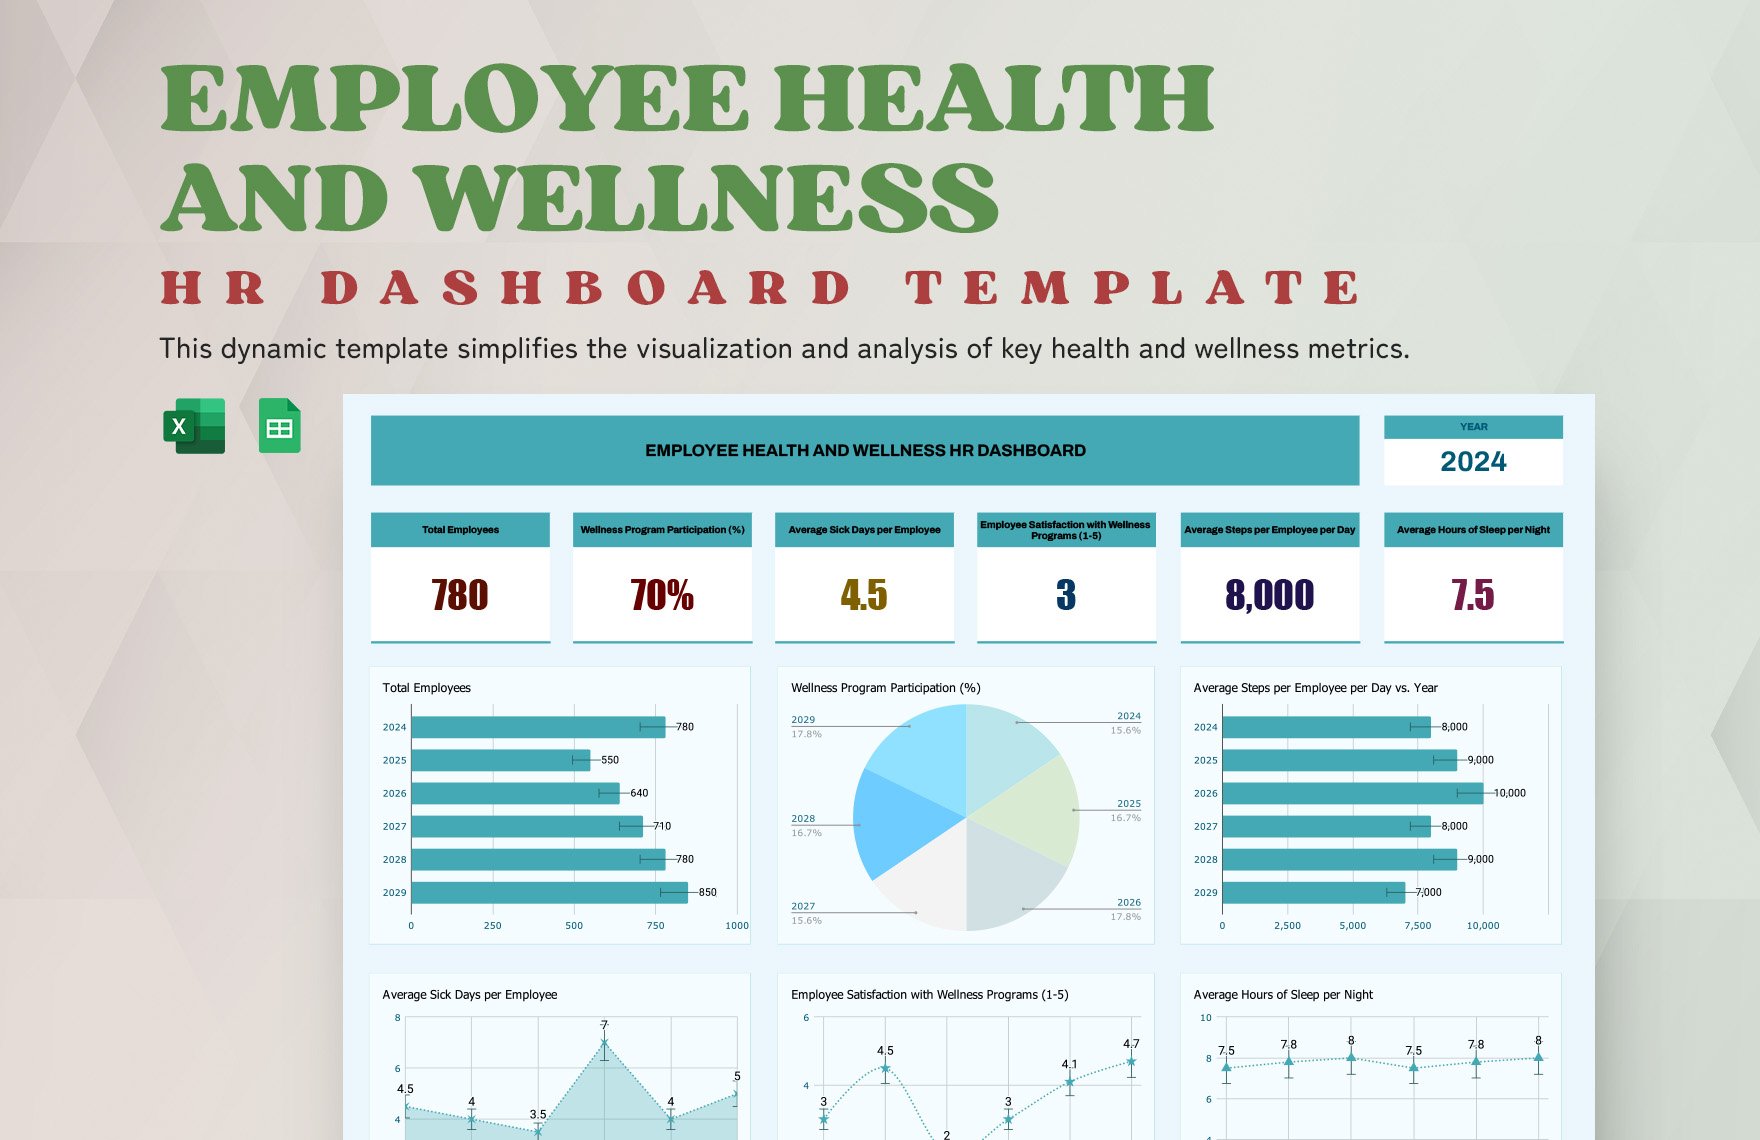 Employee Health and Wellness HR Dashboard Template